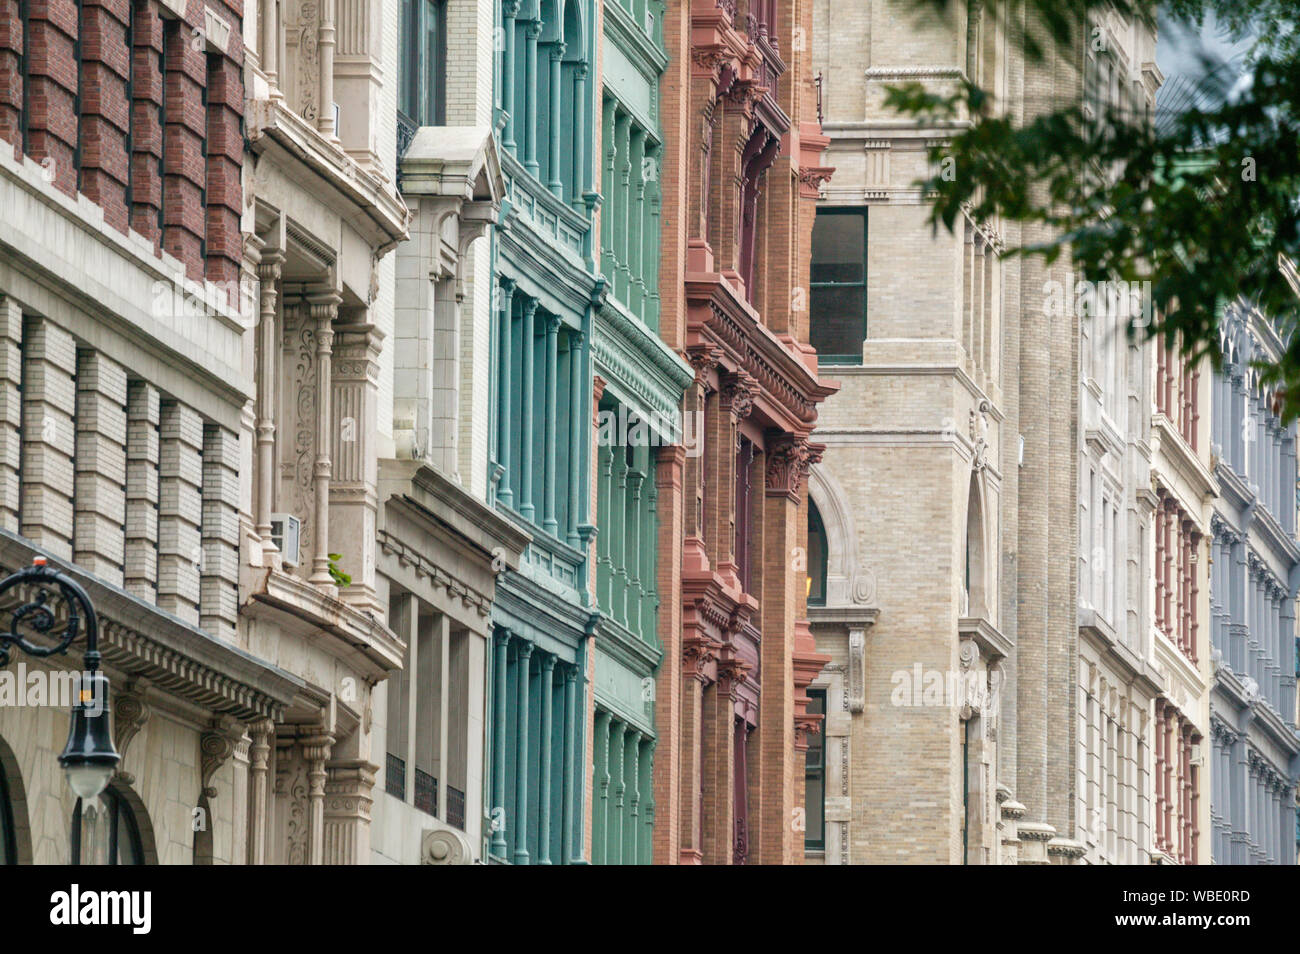 NoHo historic district cast iron facades, Broadway, East Village, New York City Stock Photo